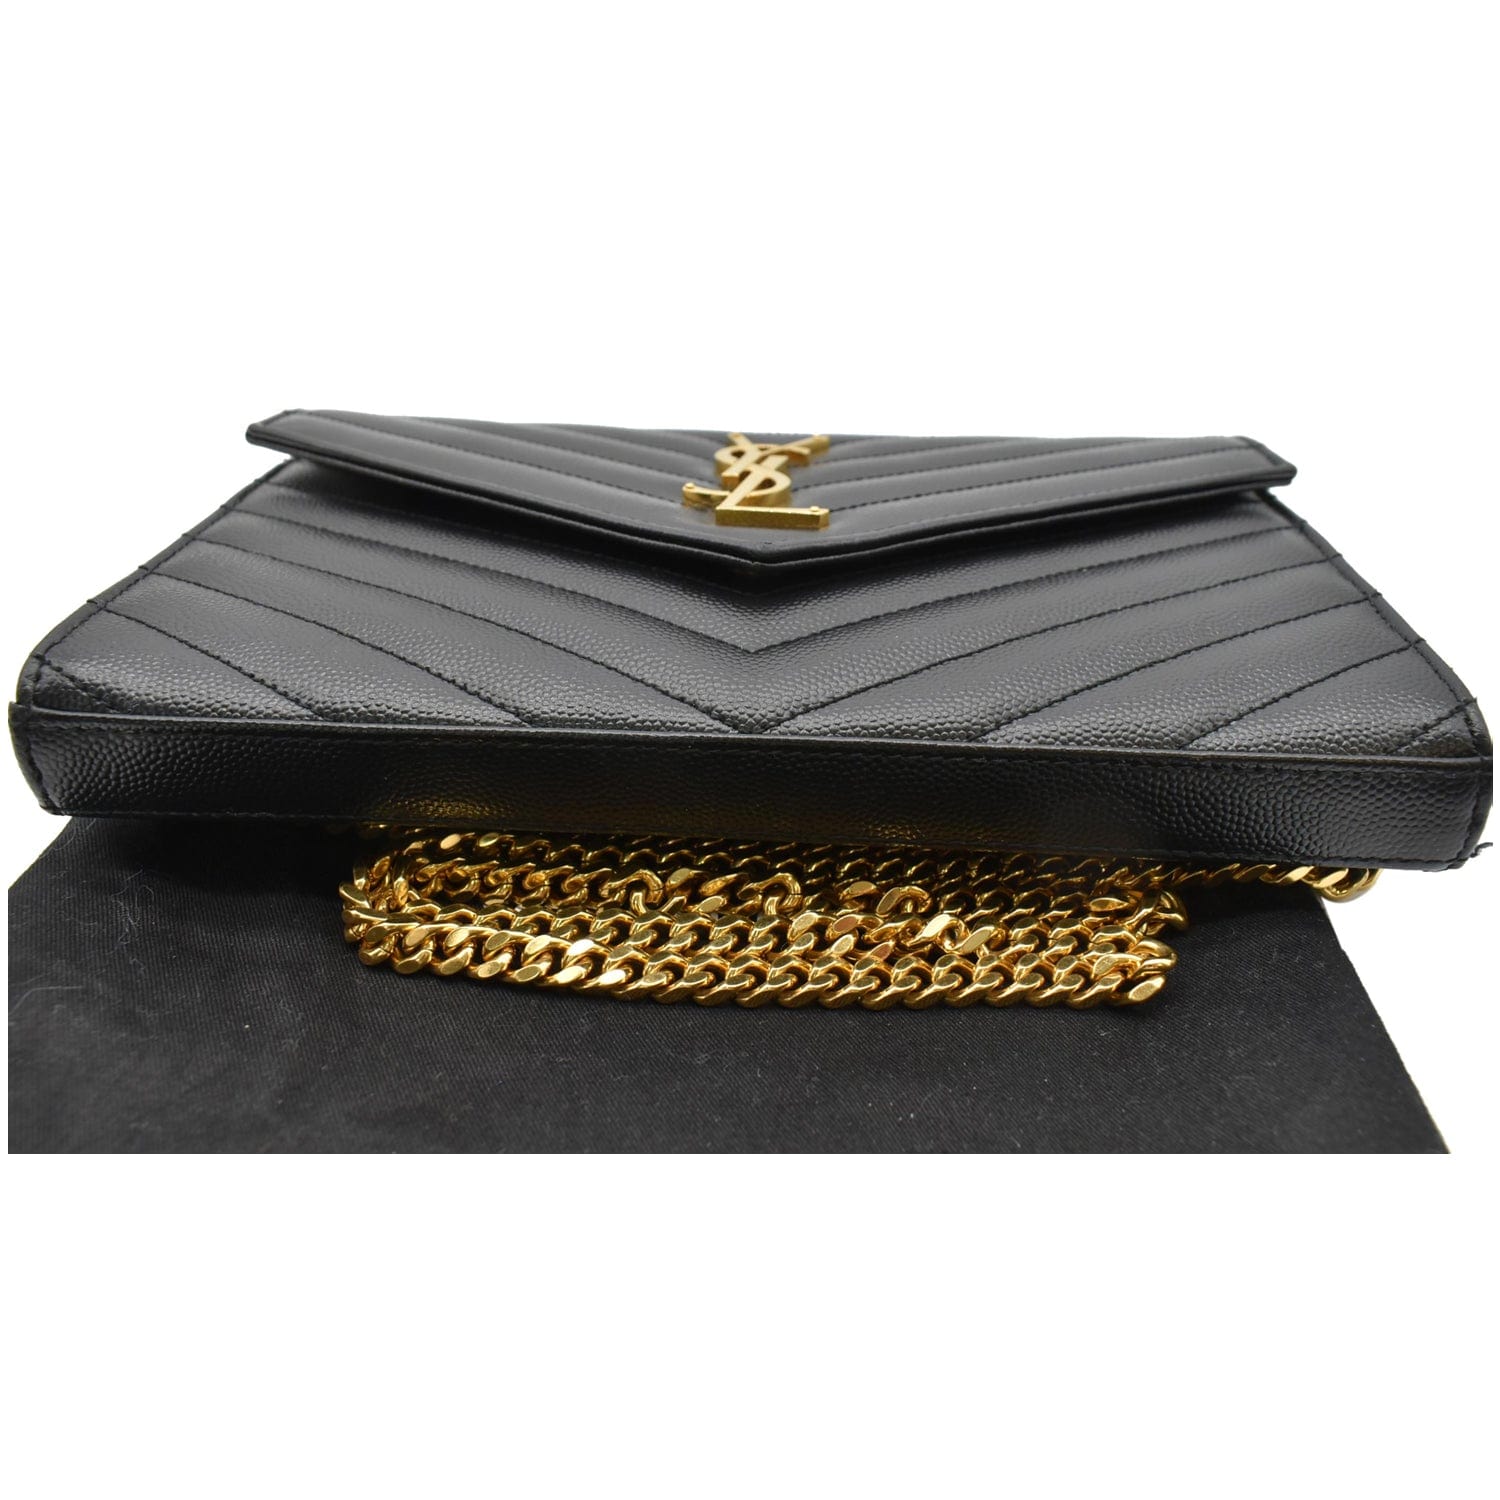 Saint Laurent black monogram chain wallet $1650 @ ysl.com My dream  crossbody purse